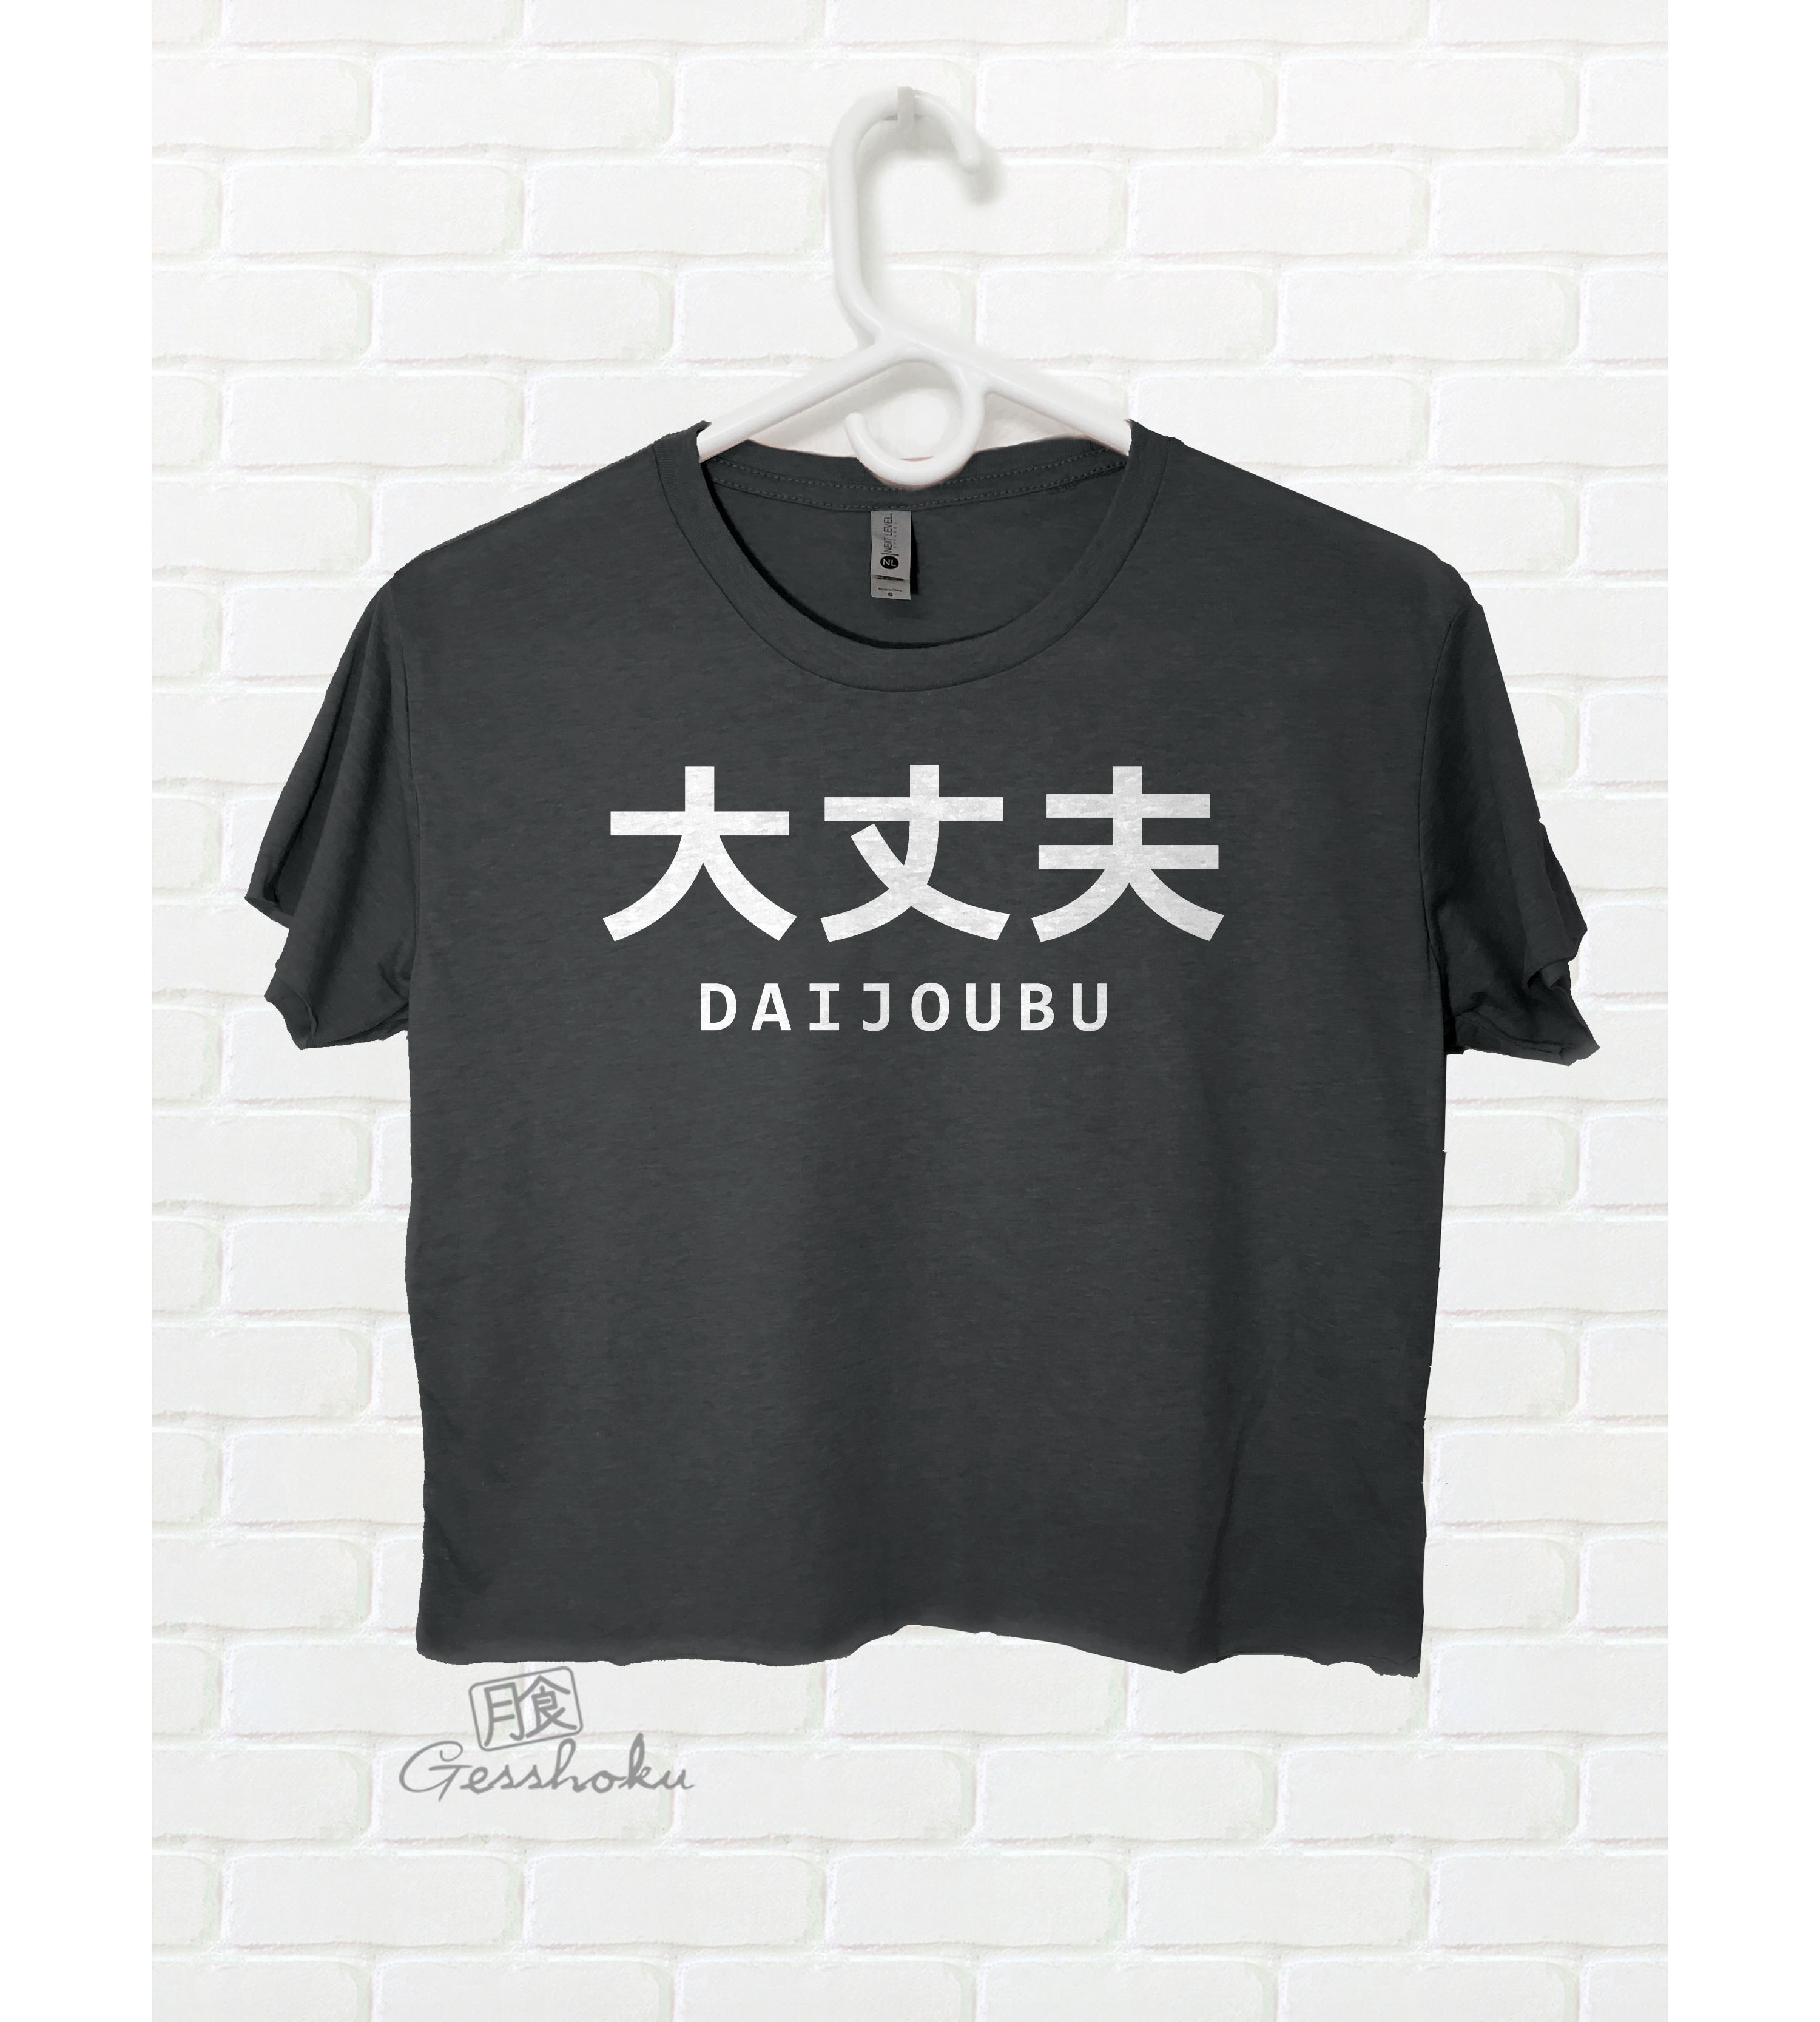 Daijoubu Crop Top T-shirt - Black